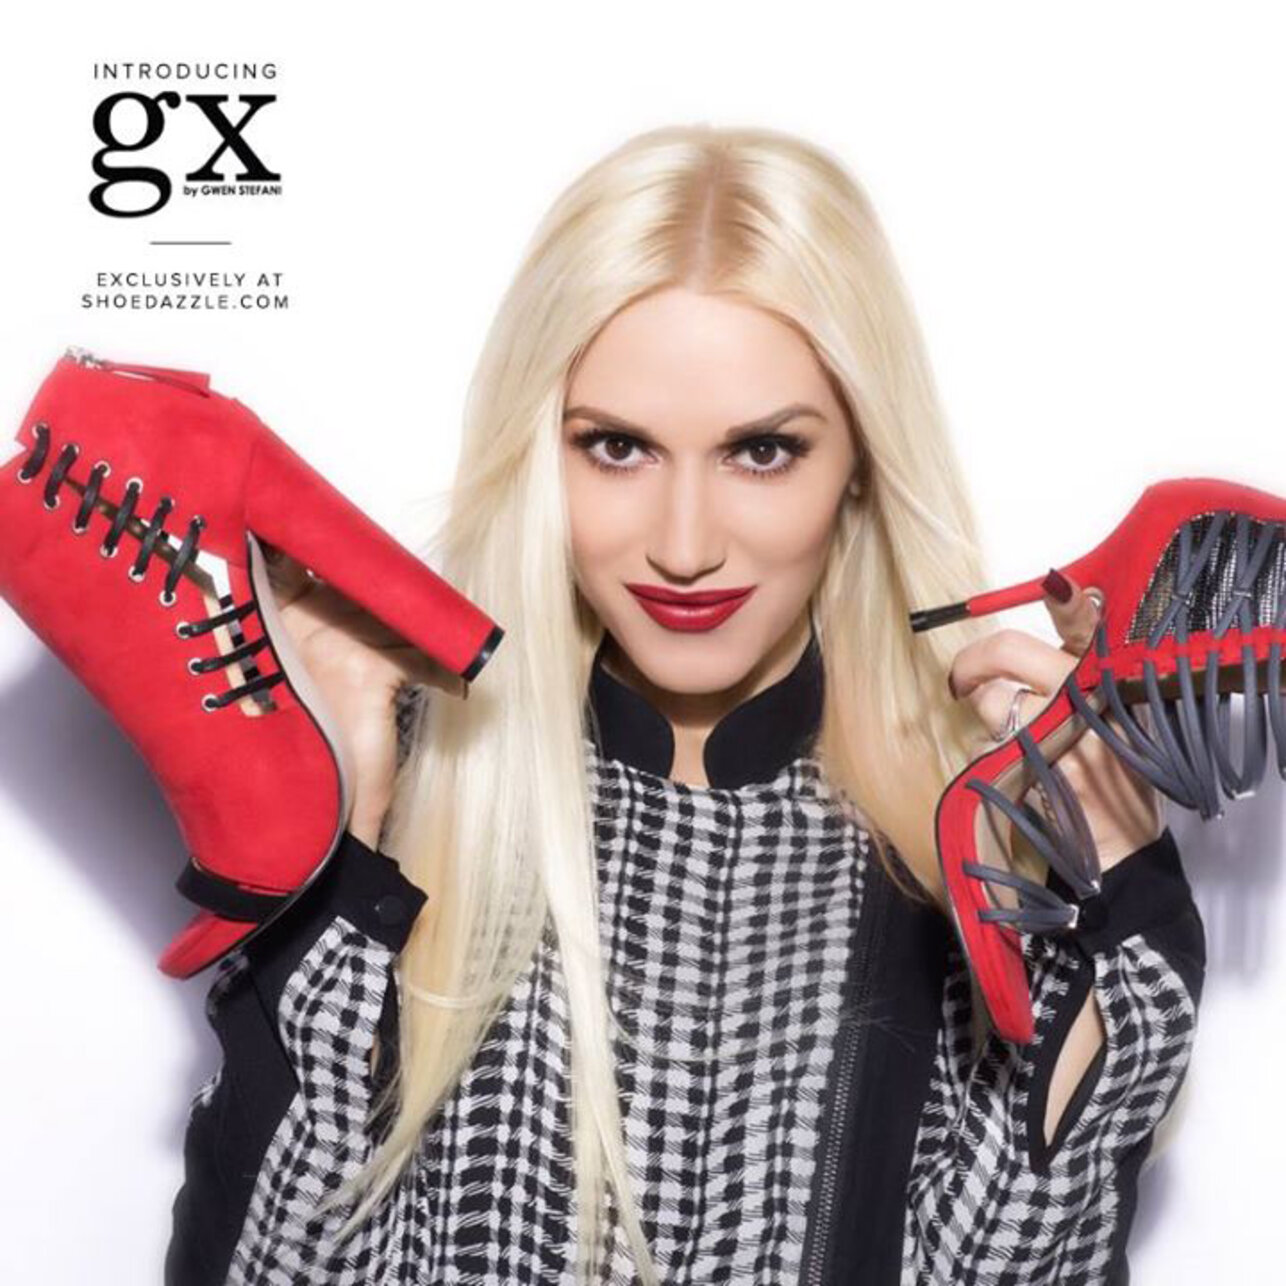 gx by Gwen Stefani ShoeDazzle